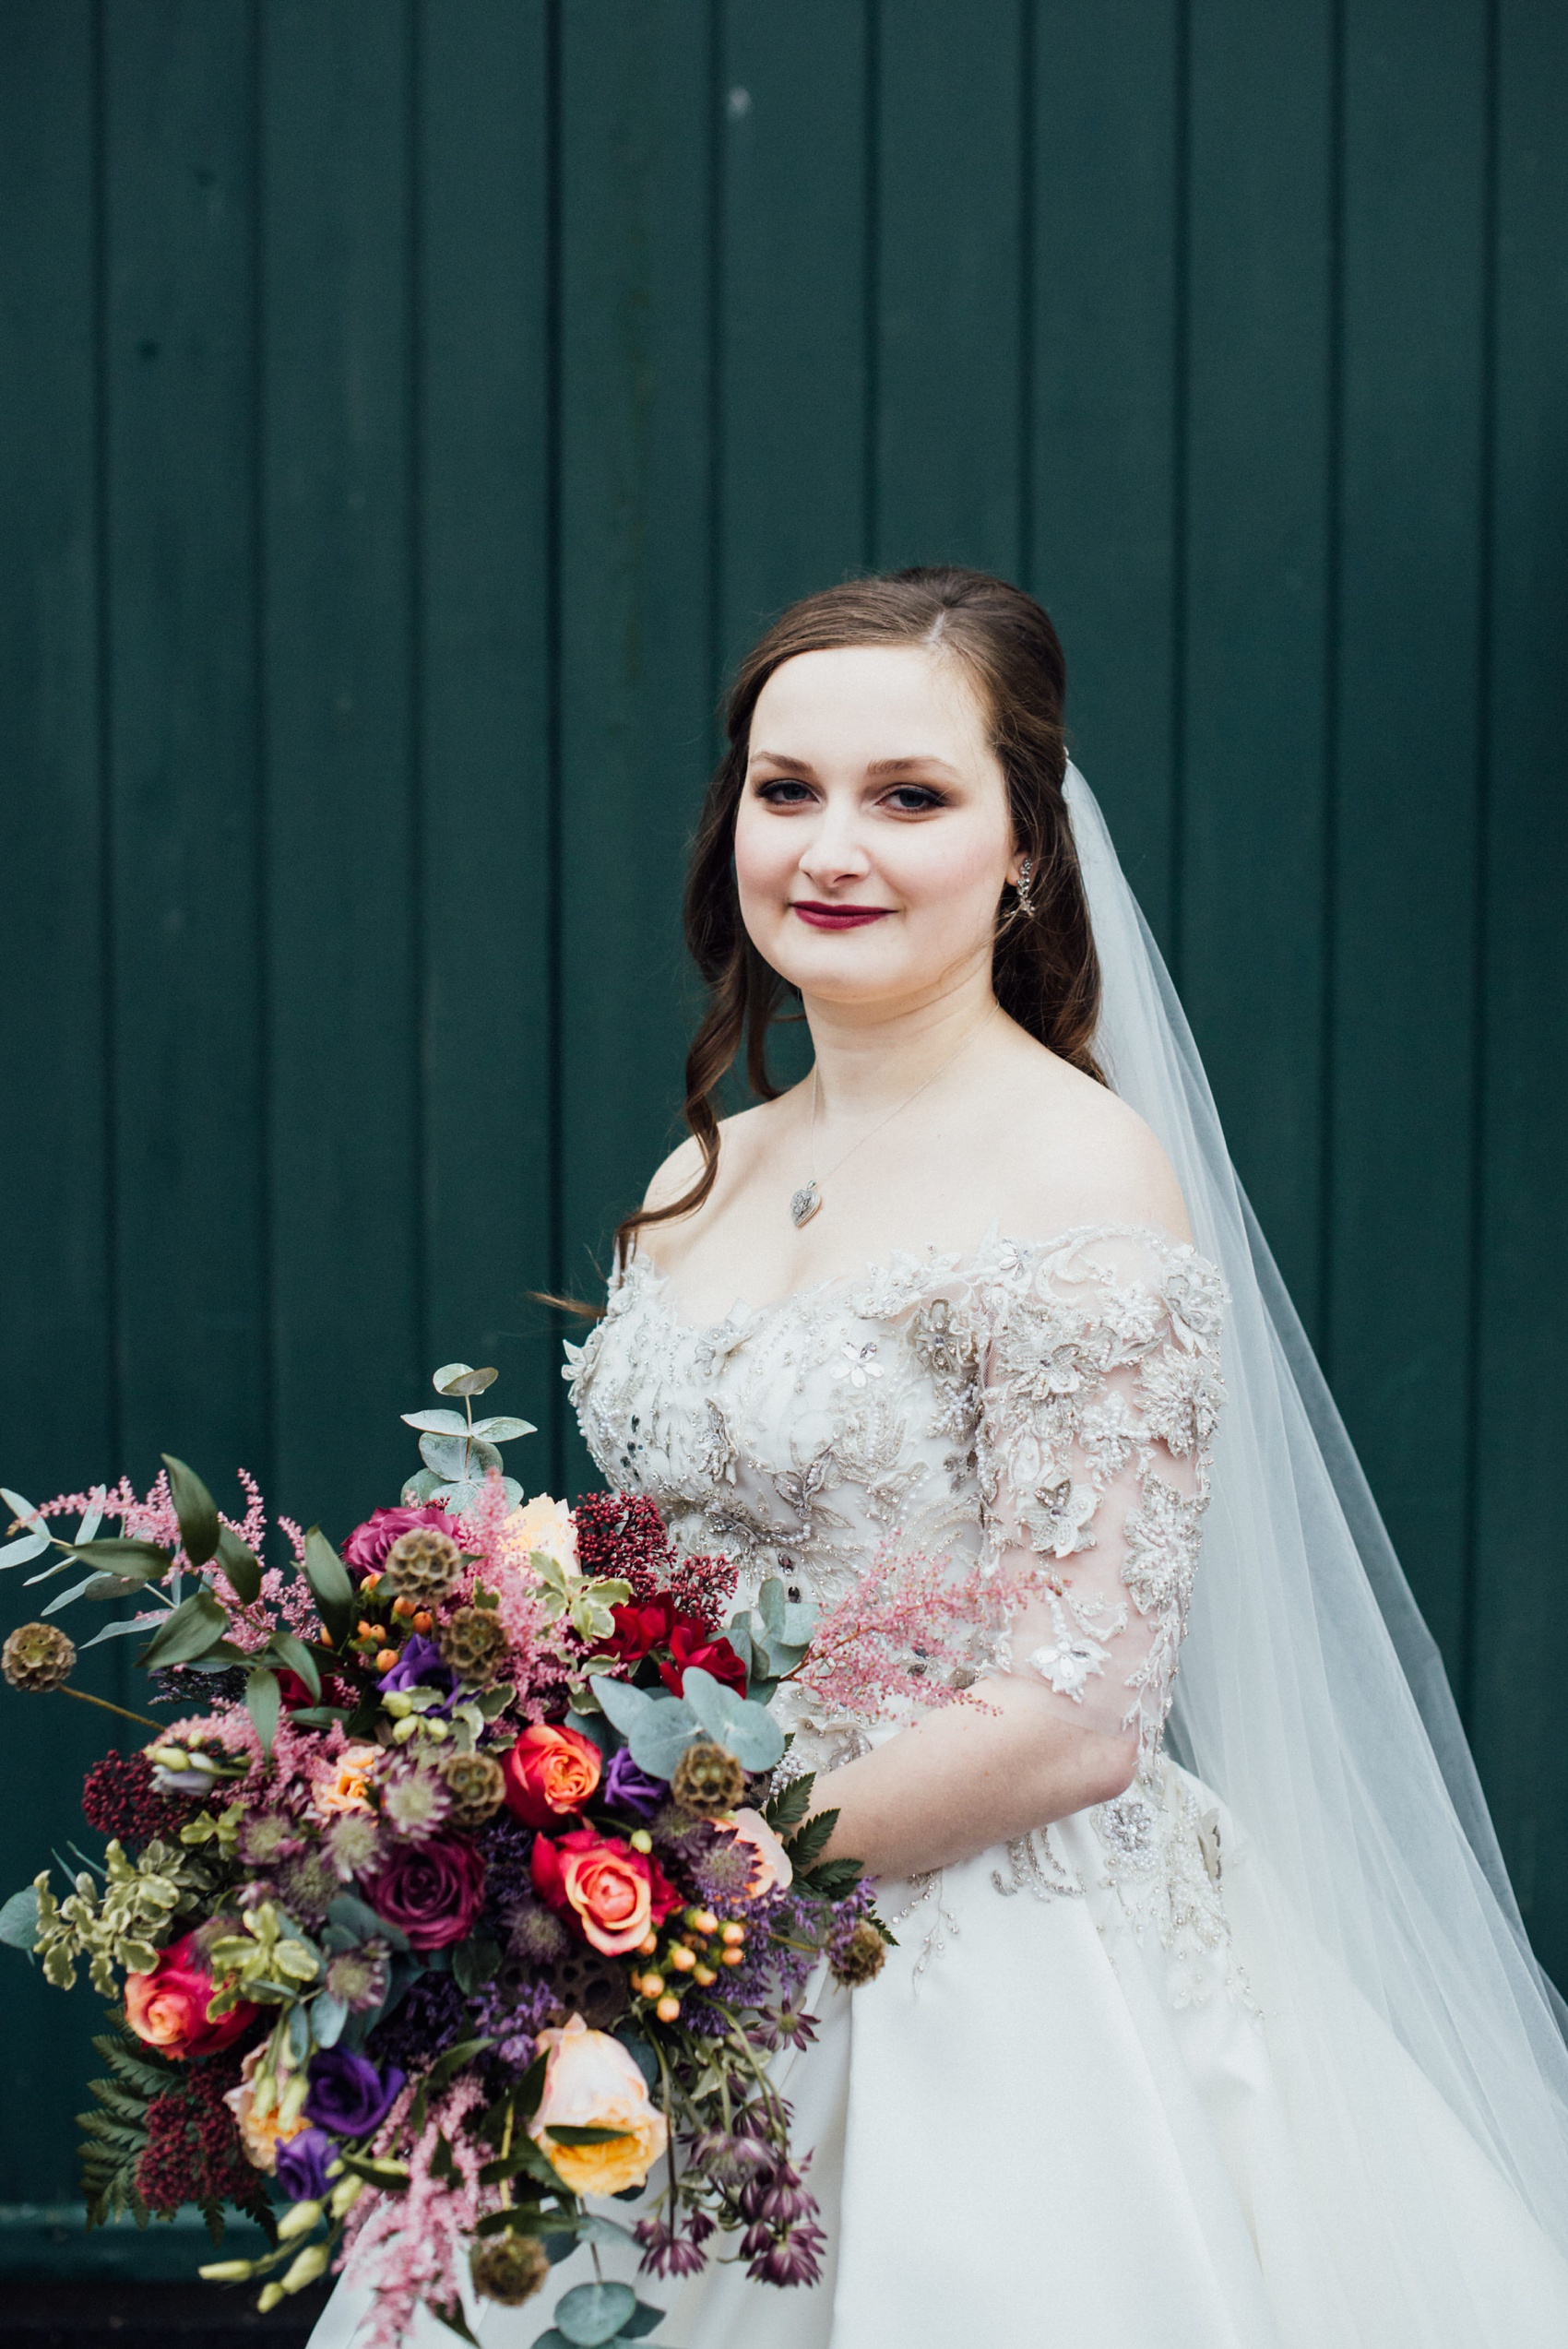 15 Bride made her own wedding dress